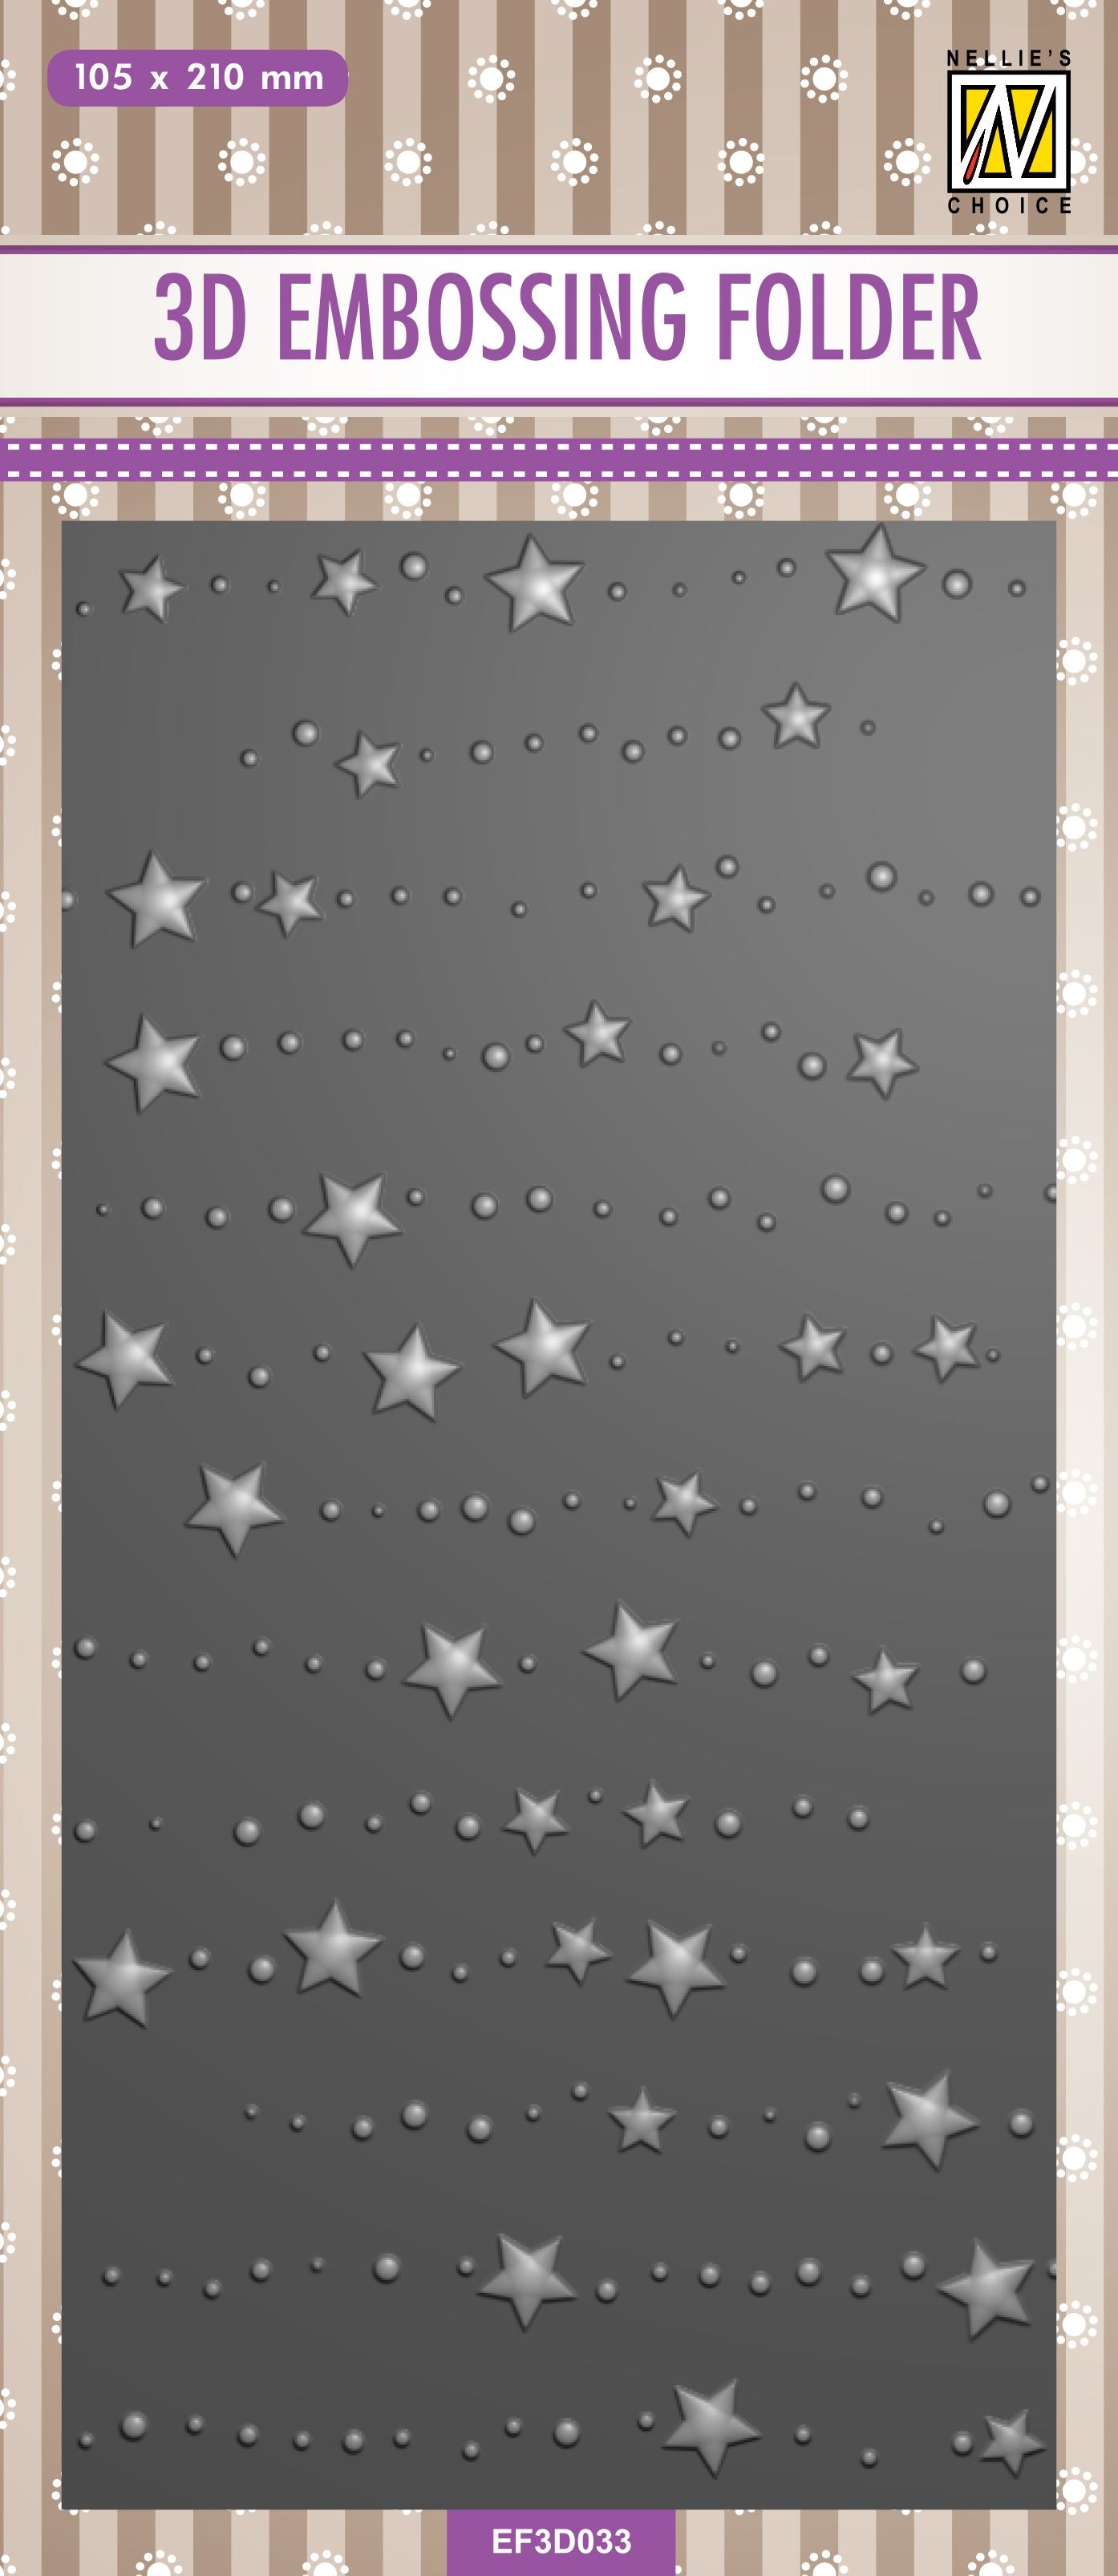 Nellie's Choice 3D Embossing Folder Slimline Size - Stars & Dots